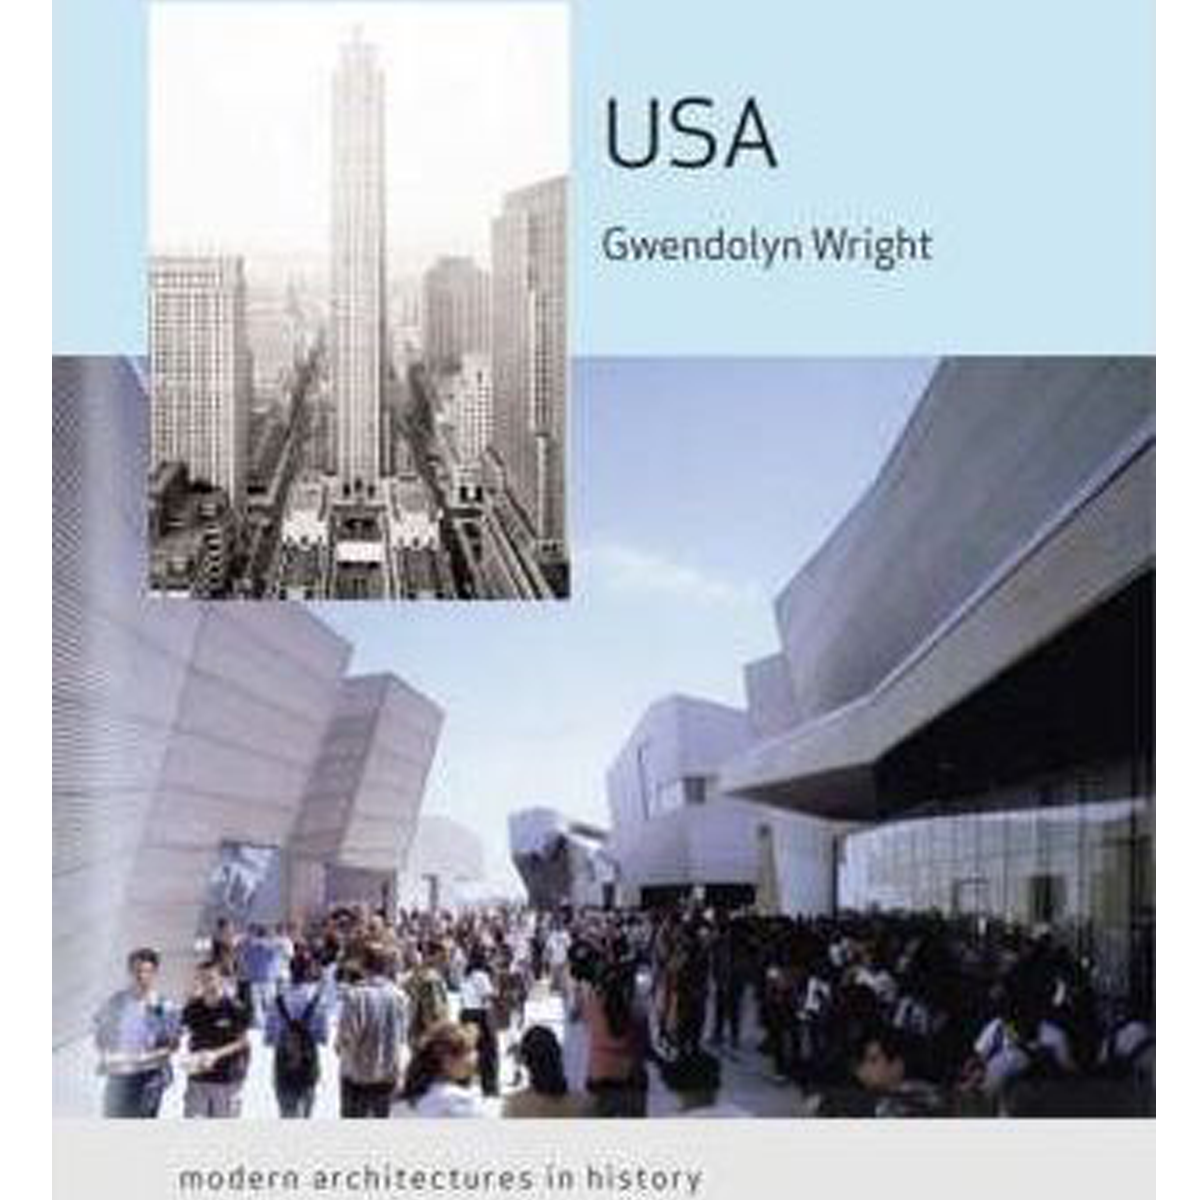 USA: Modern Architectures